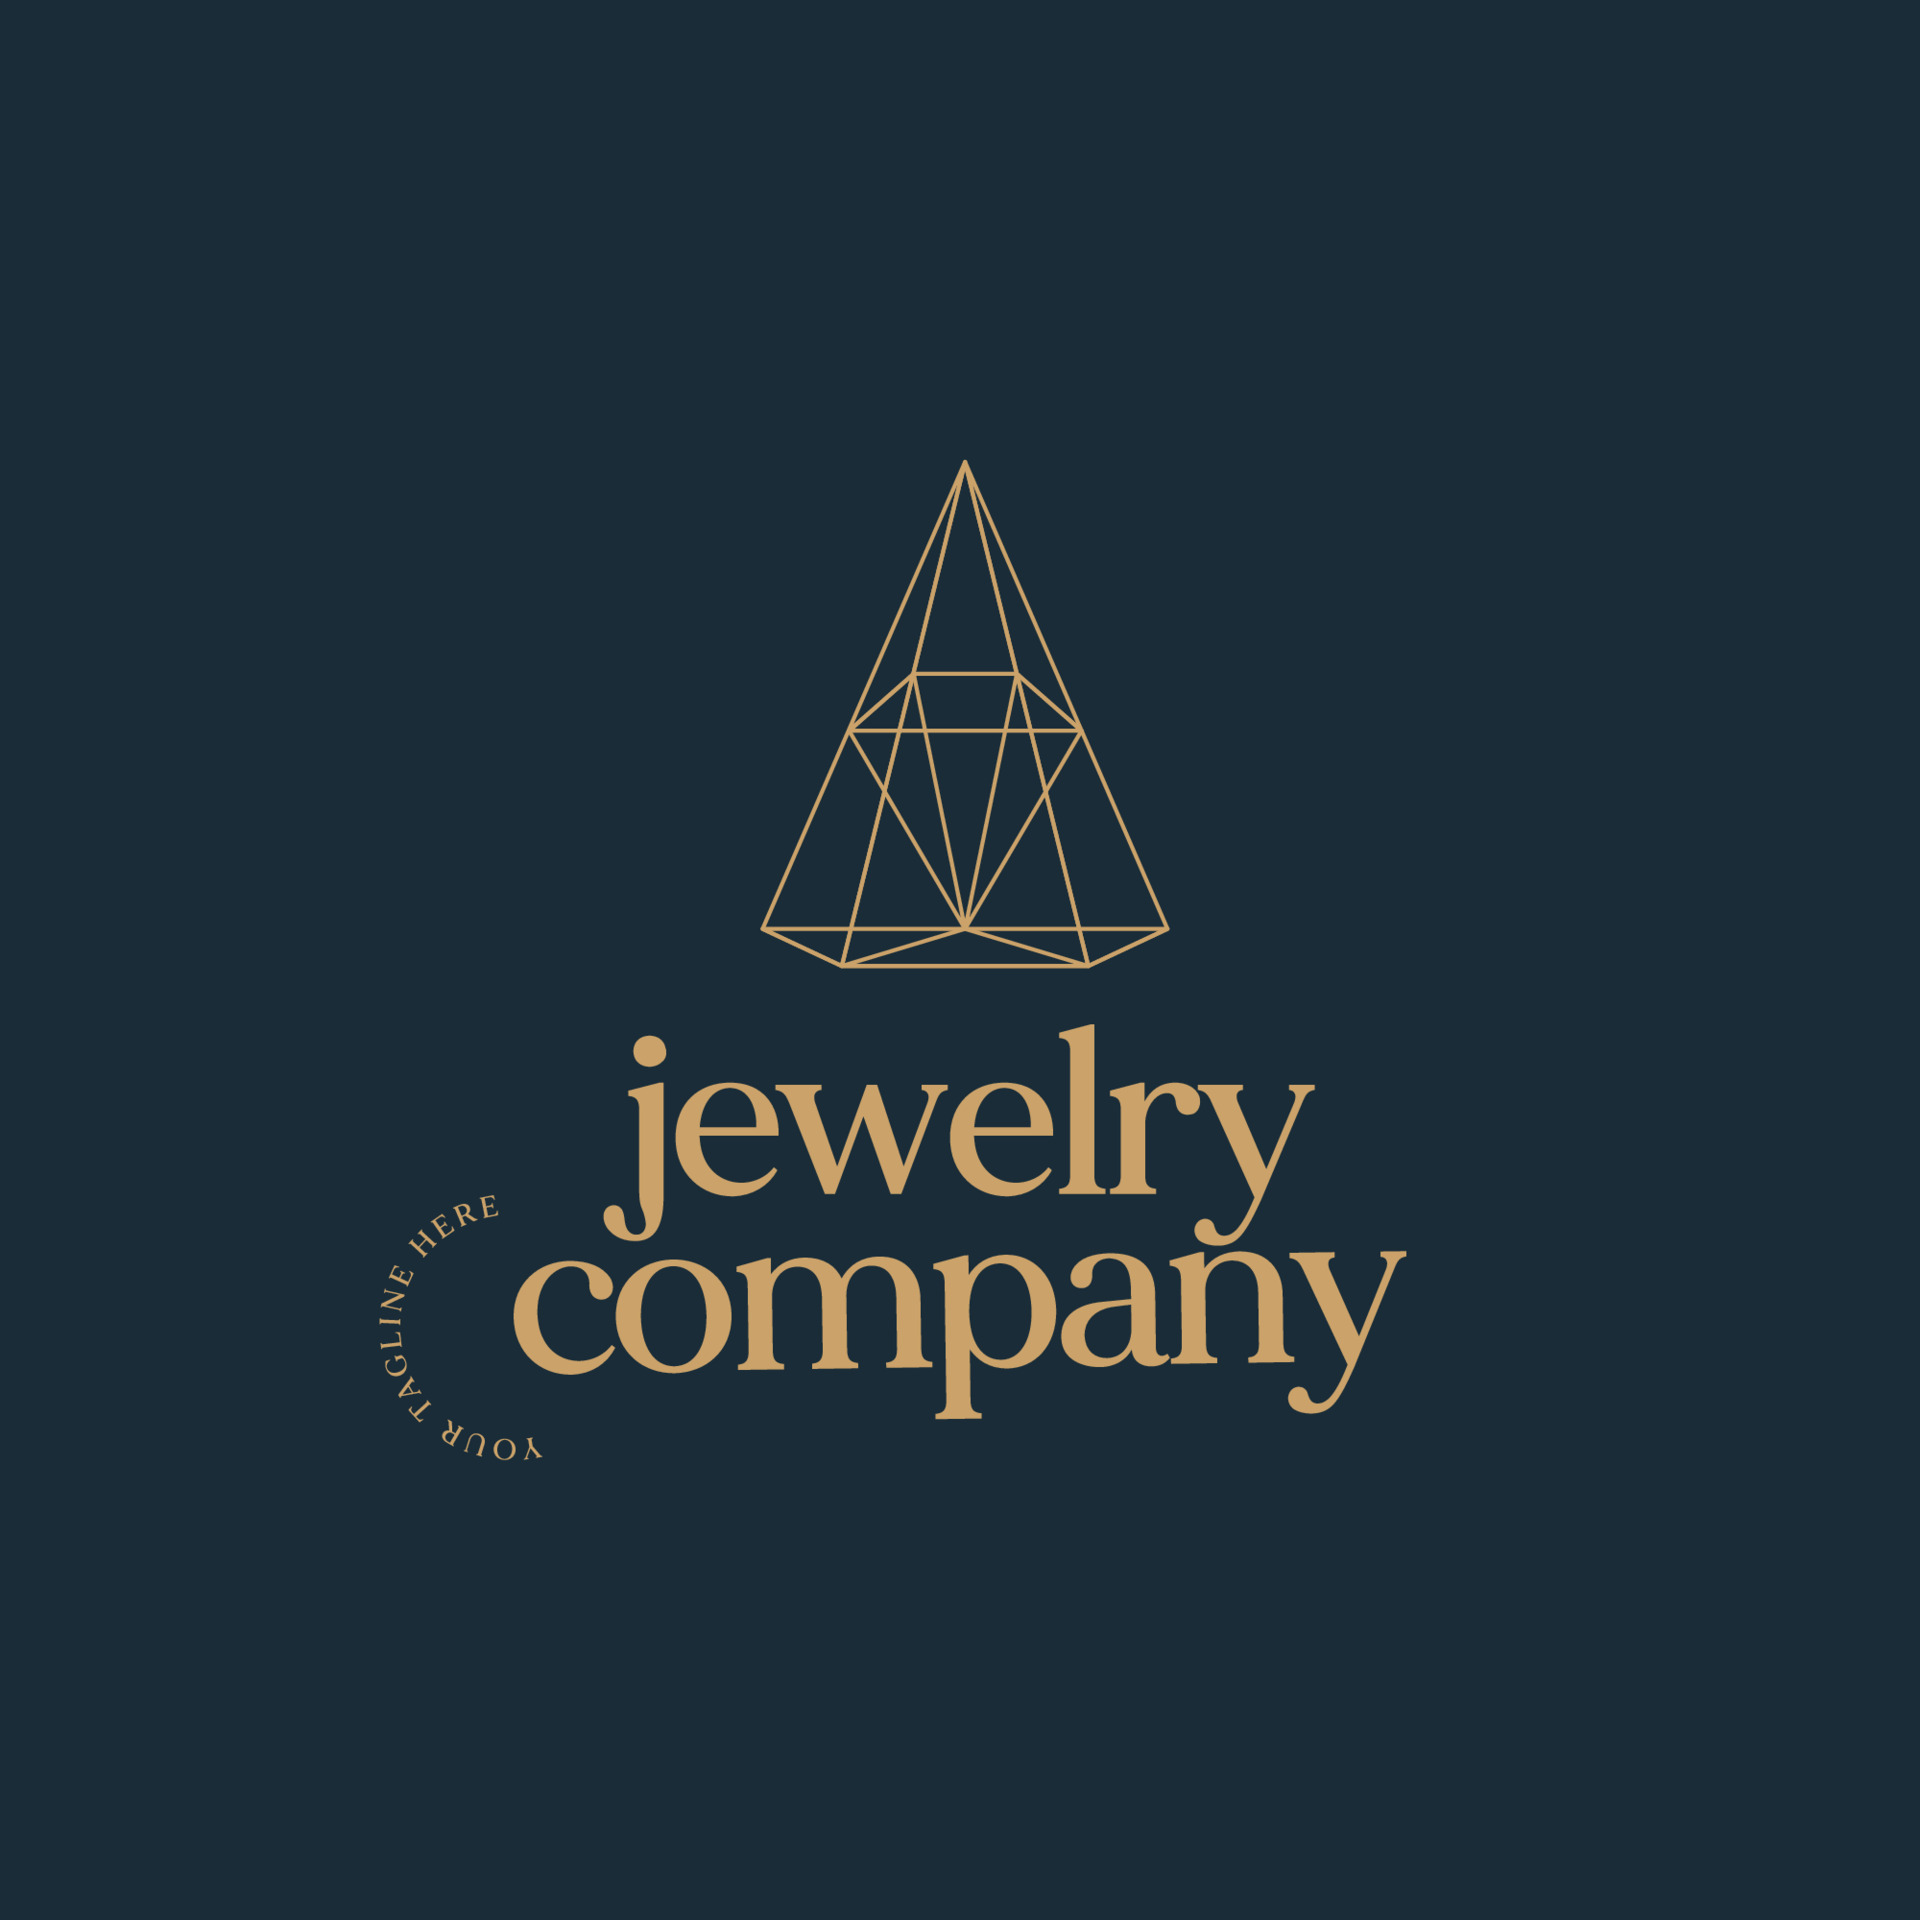 jewelry company aesthetic logo design inspiration 5485025 Vector Art at ...